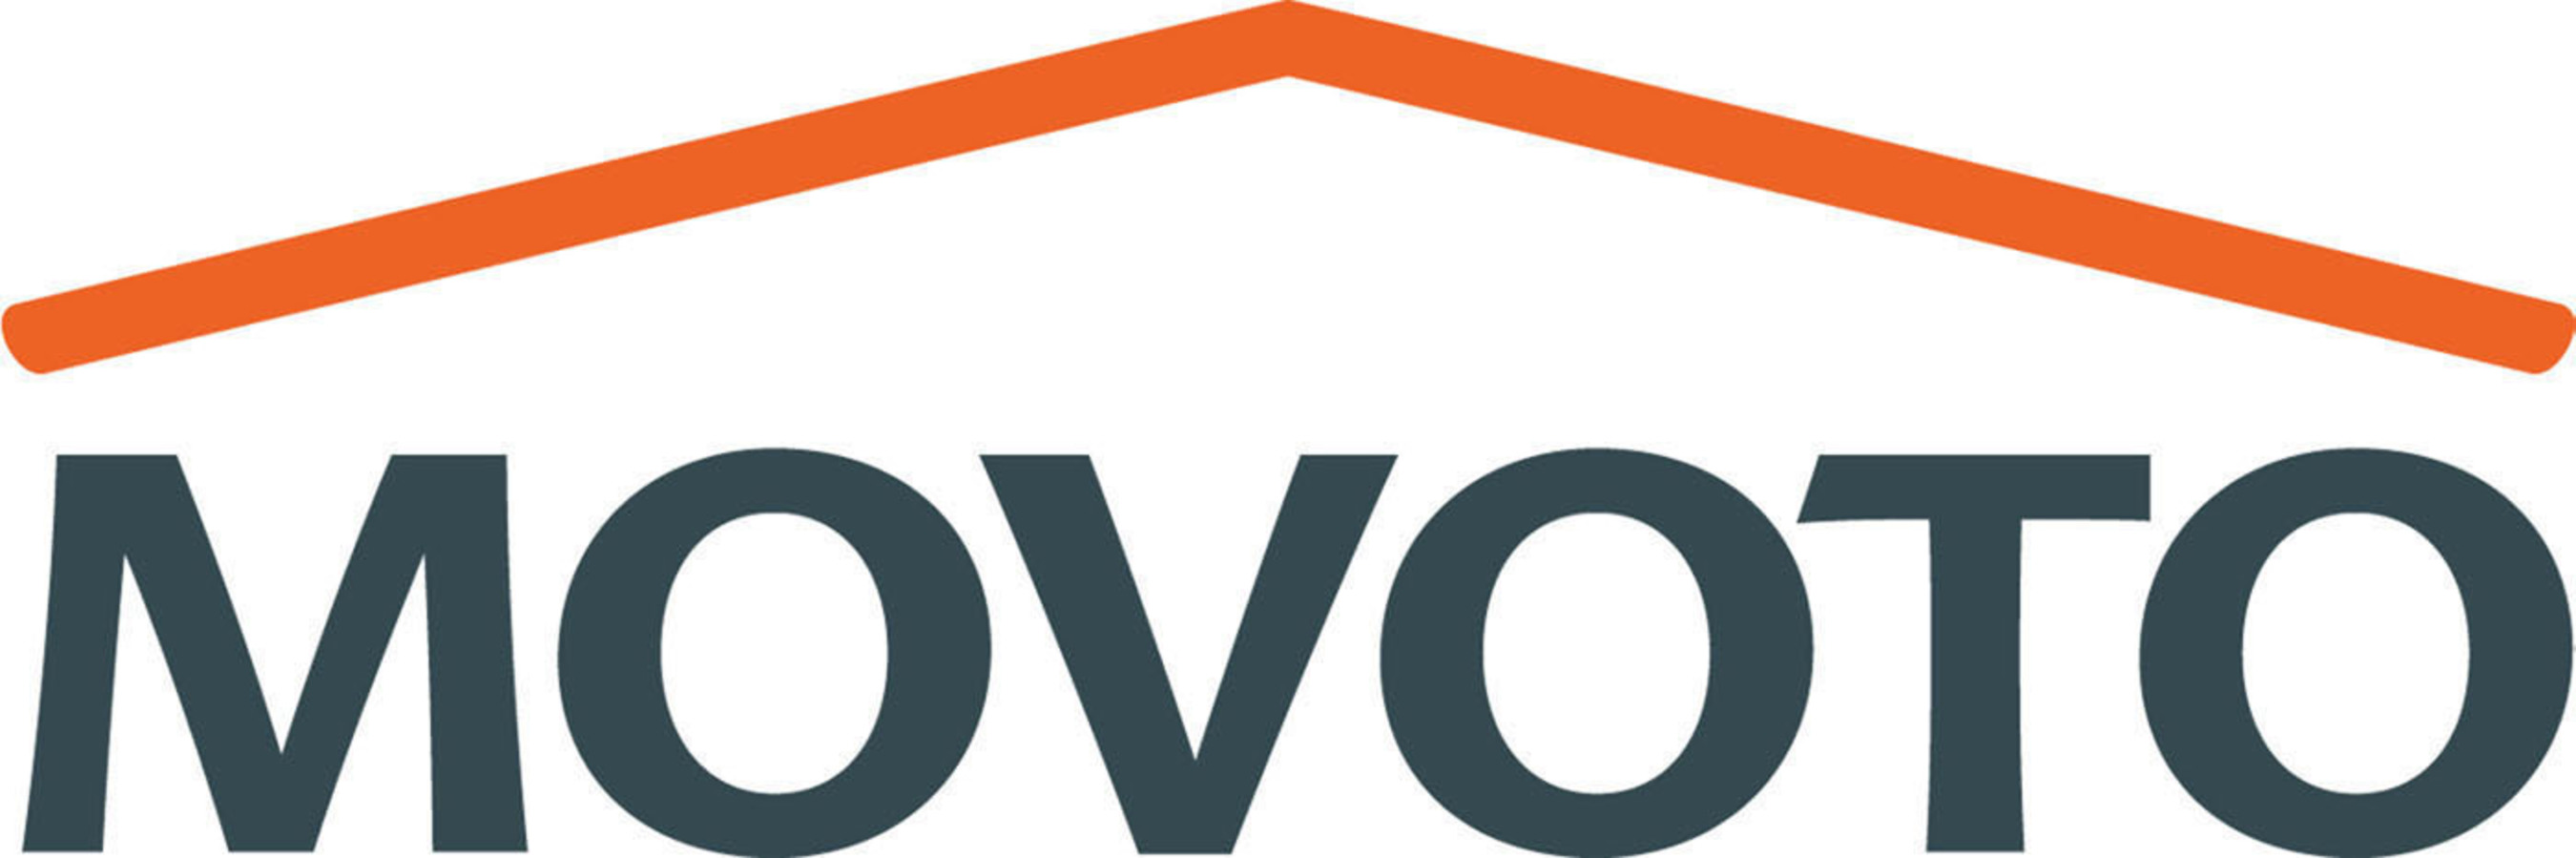 Movoto Online Real Estate. (PRNewsFoto/Movoto) (PRNewsFoto/)